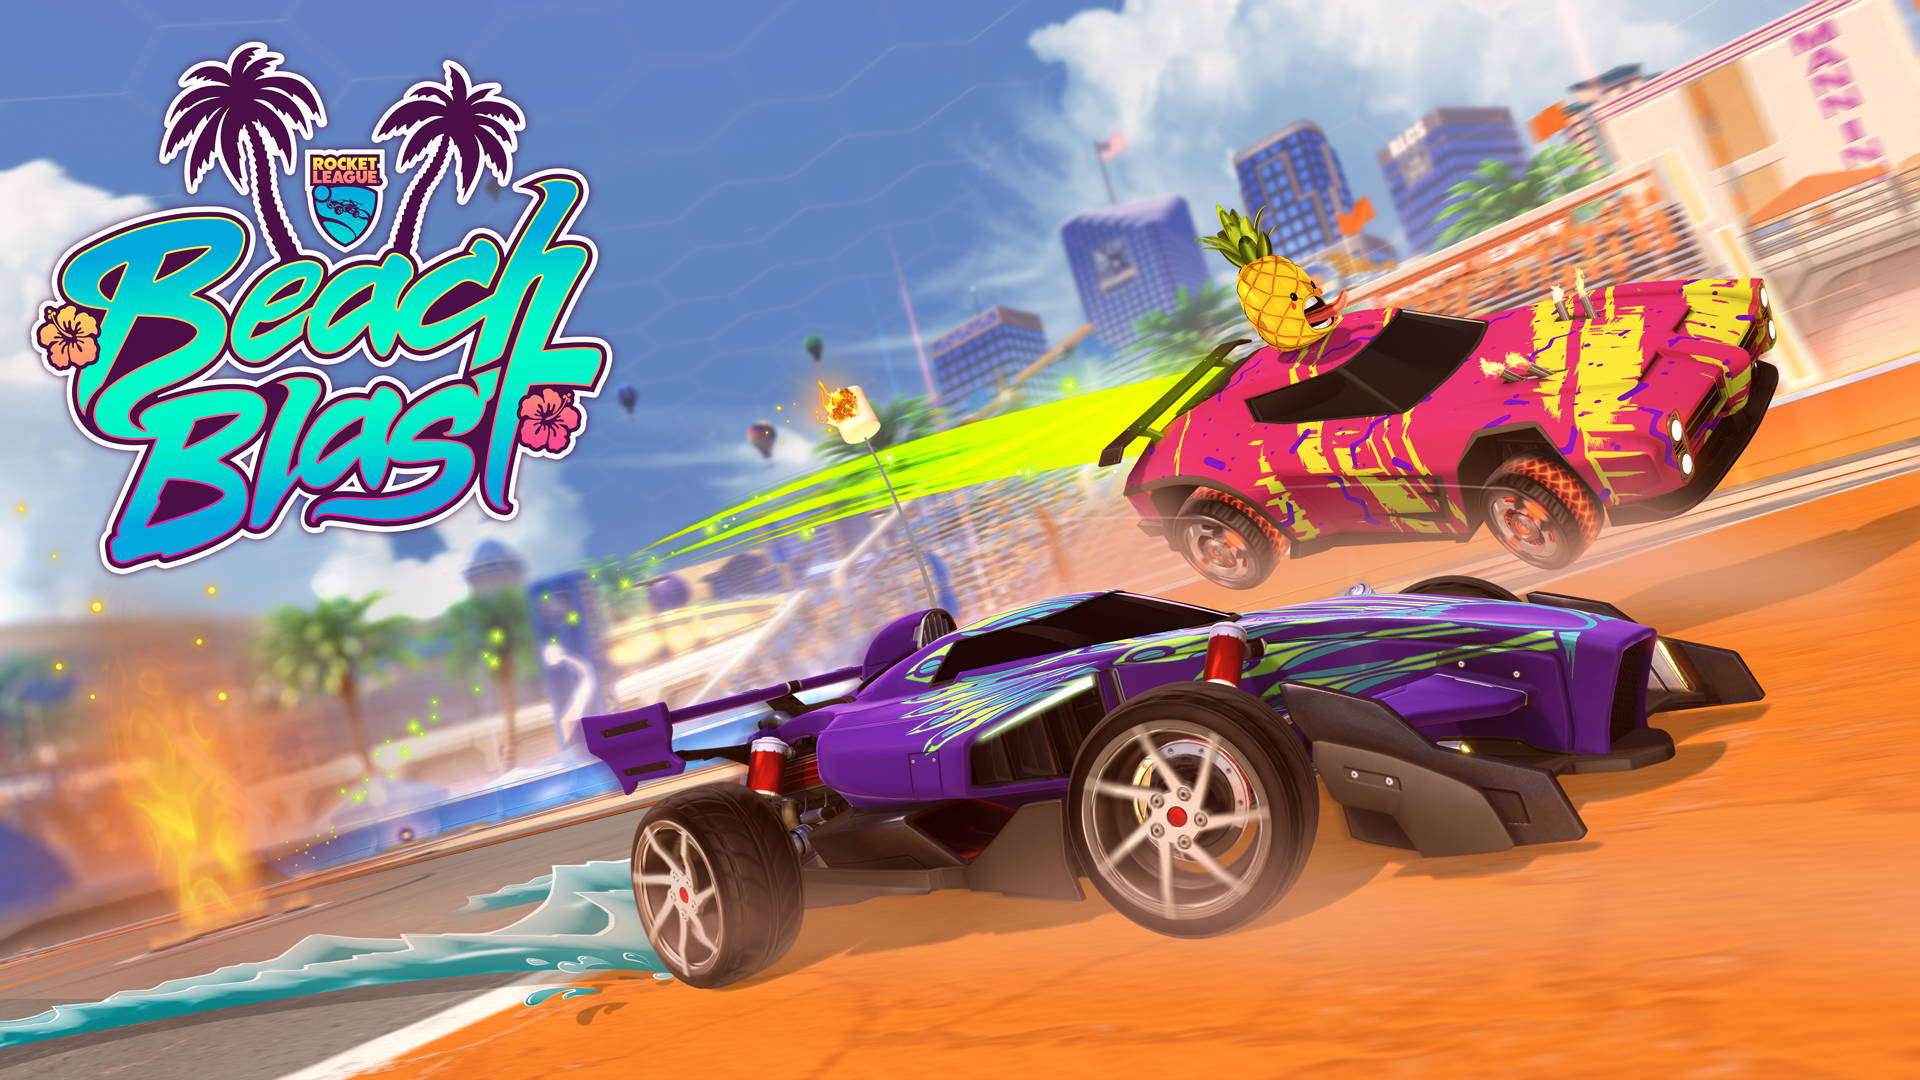 Rocket League Beach Blast Poster Background